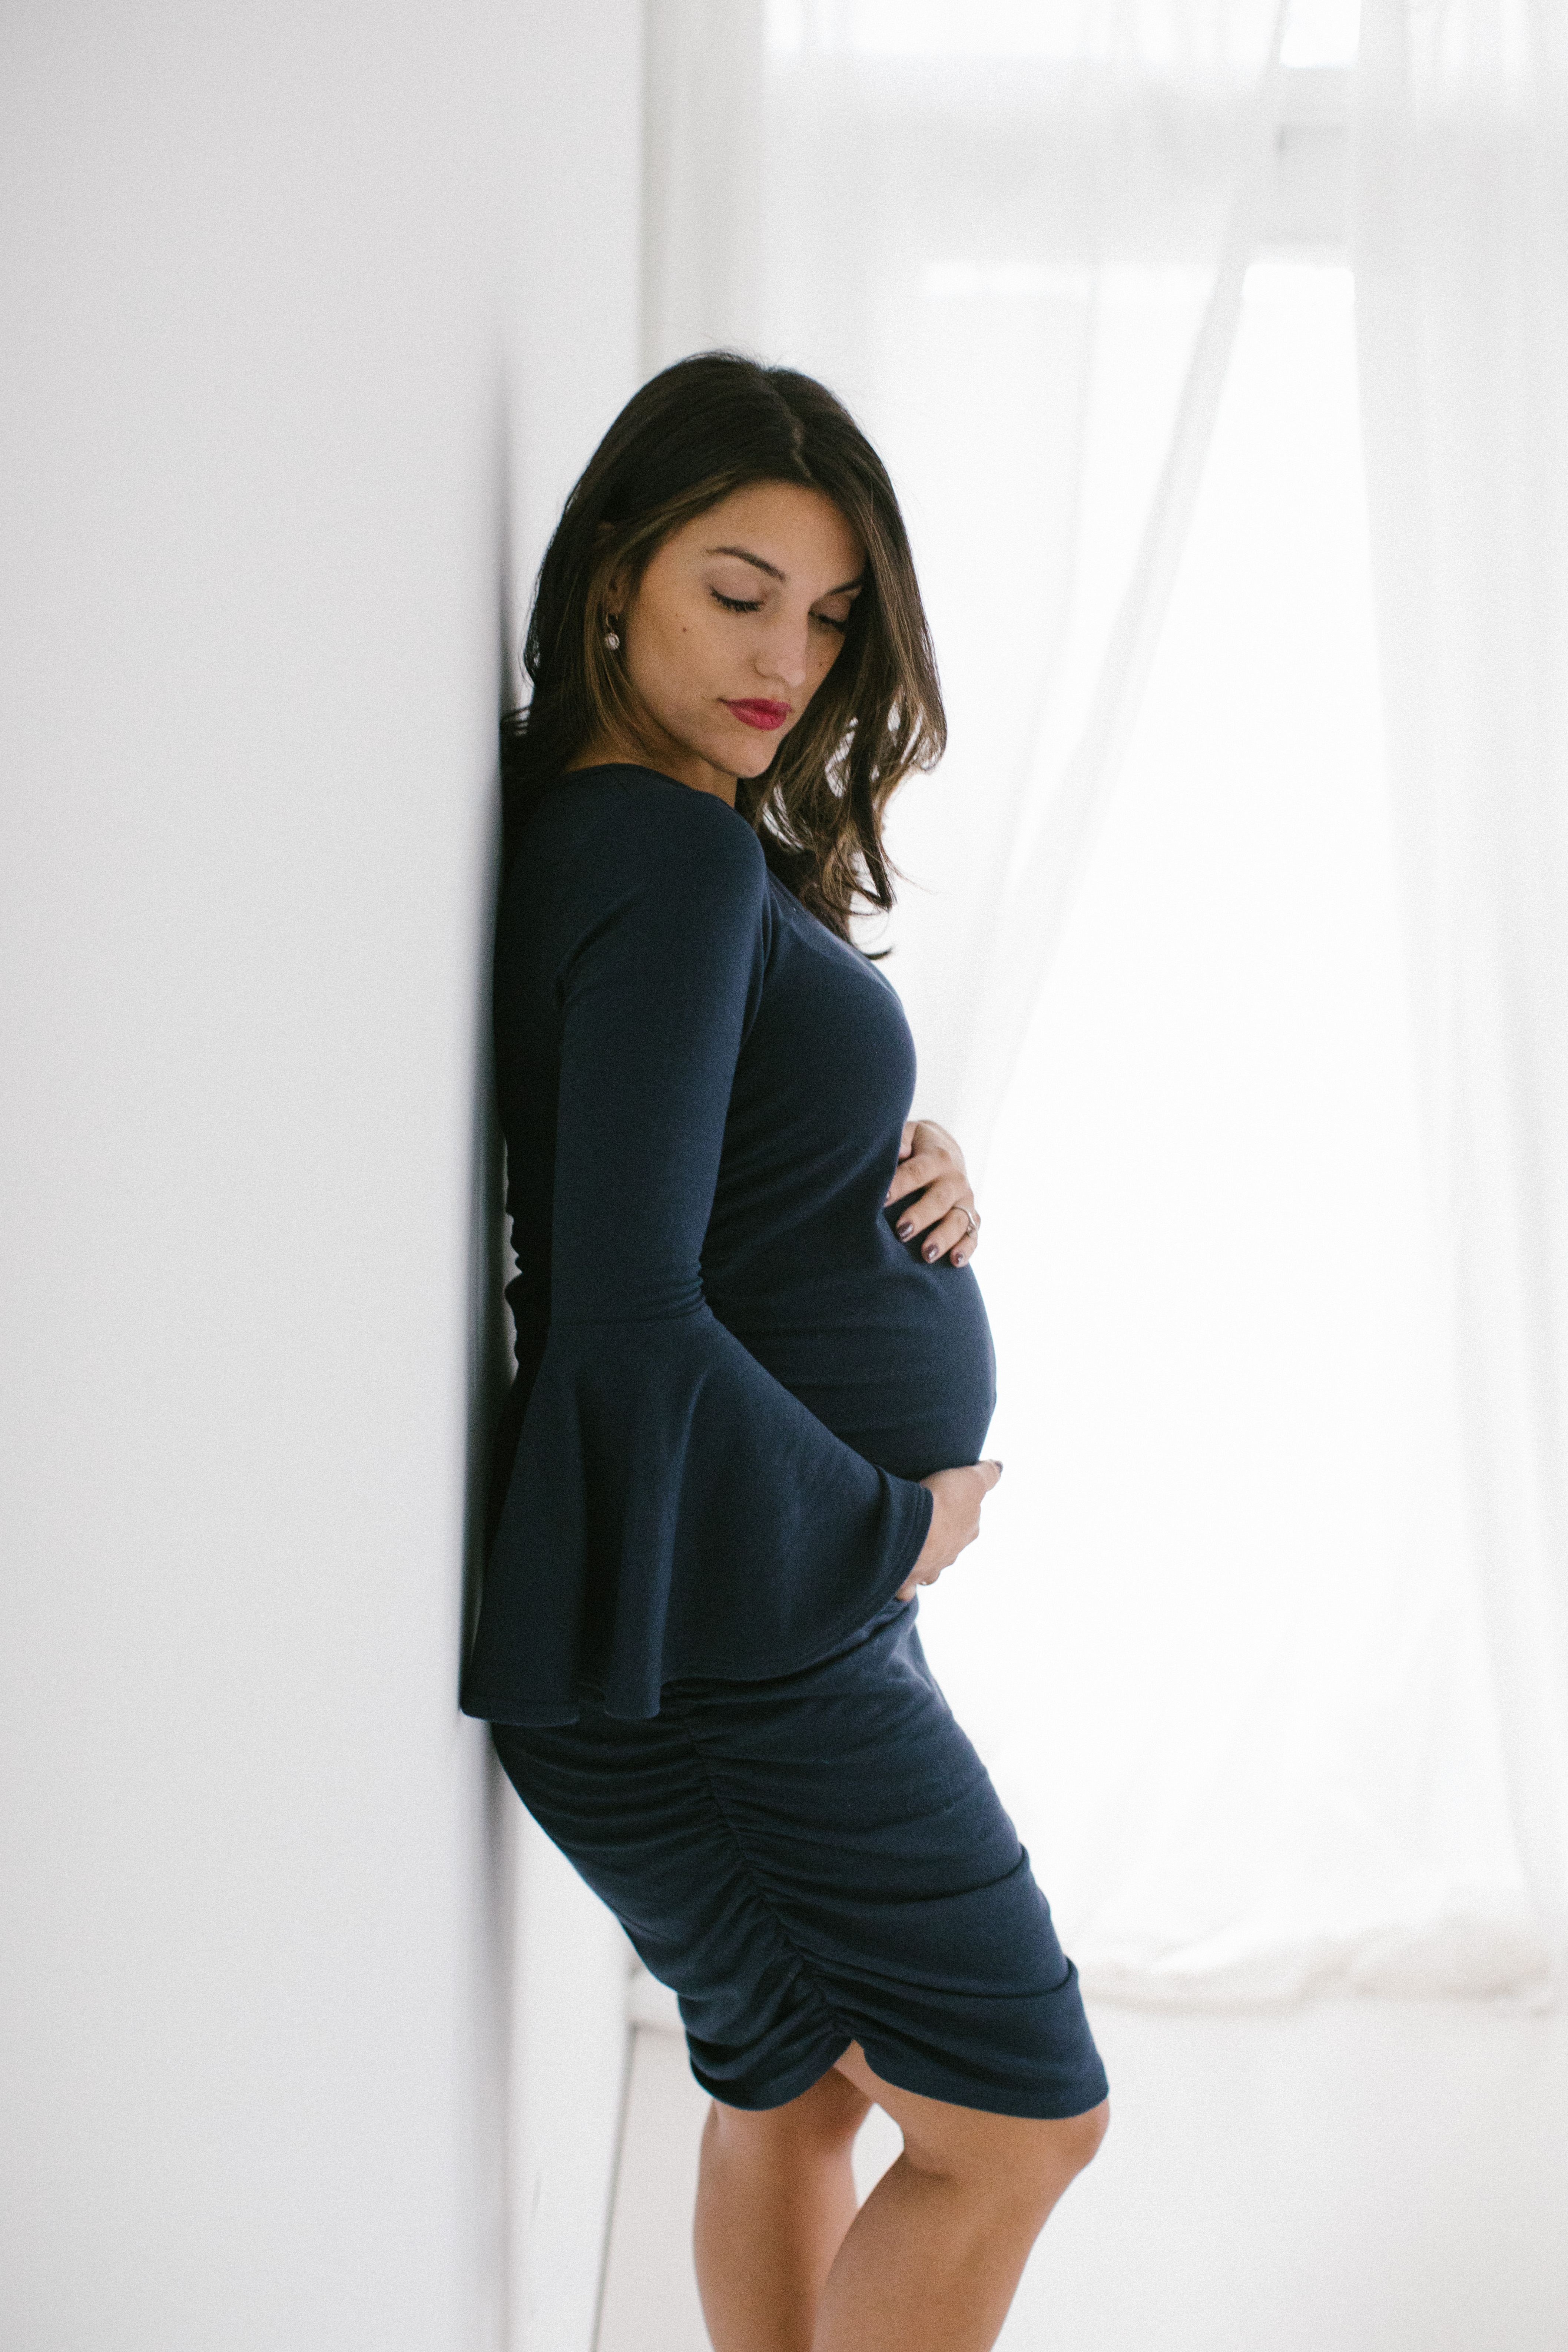 Elle Baker Photography captures pregnancy and baby bump photos